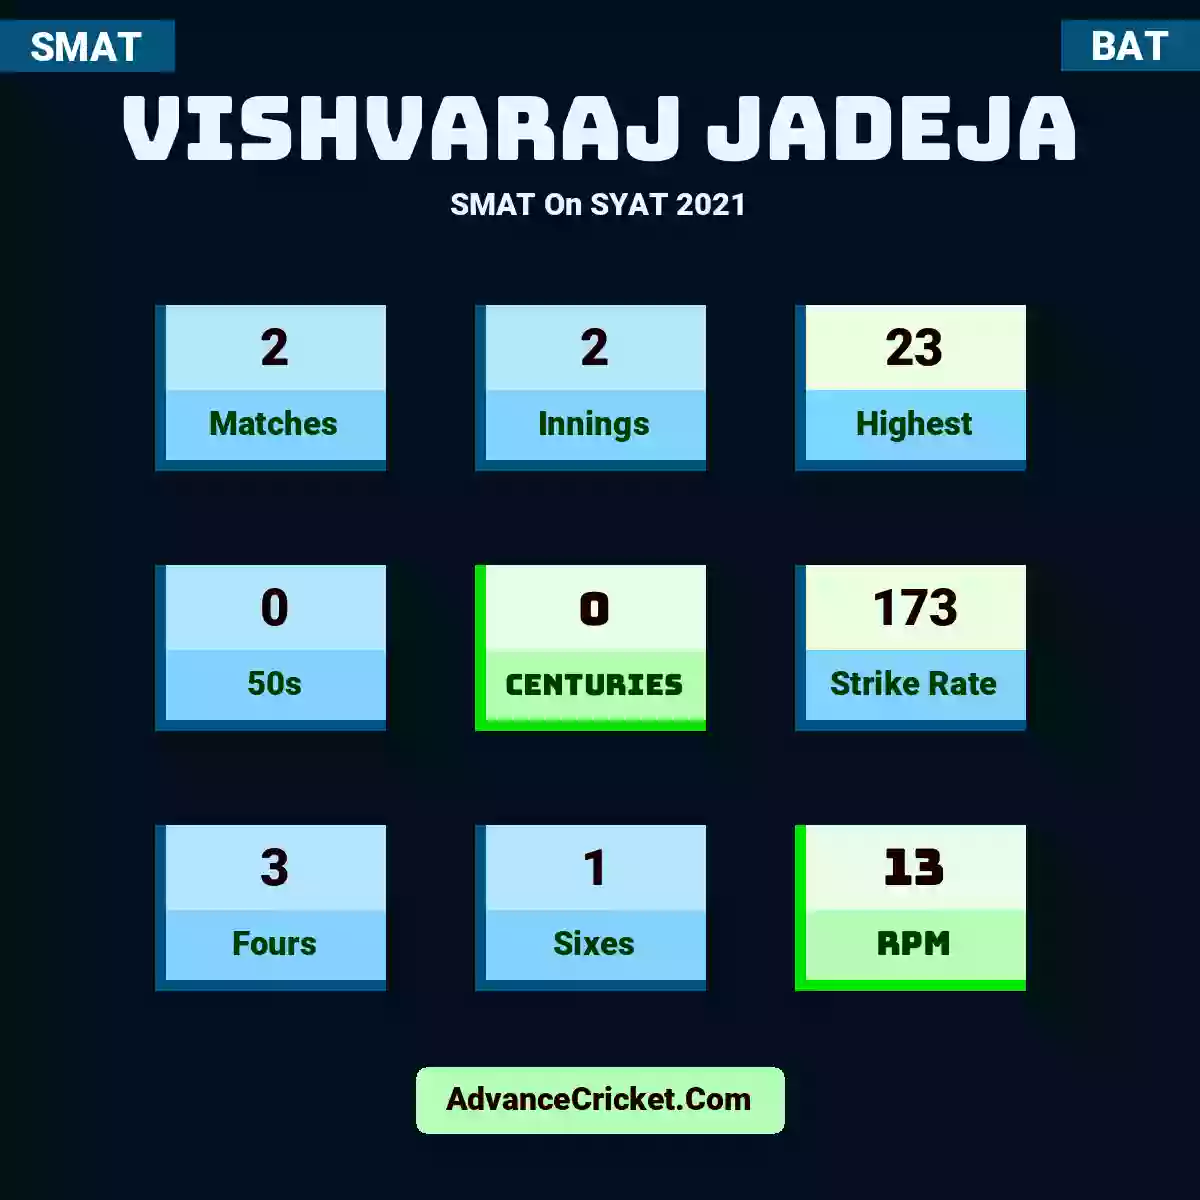 Vishvaraj Jadeja SMAT  On SYAT 2021, Vishvaraj Jadeja played 2 matches, scored 23 runs as highest, 0 half-centuries, and 0 centuries, with a strike rate of 173. V.Jadeja hit 3 fours and 1 sixes, with an RPM of 13.